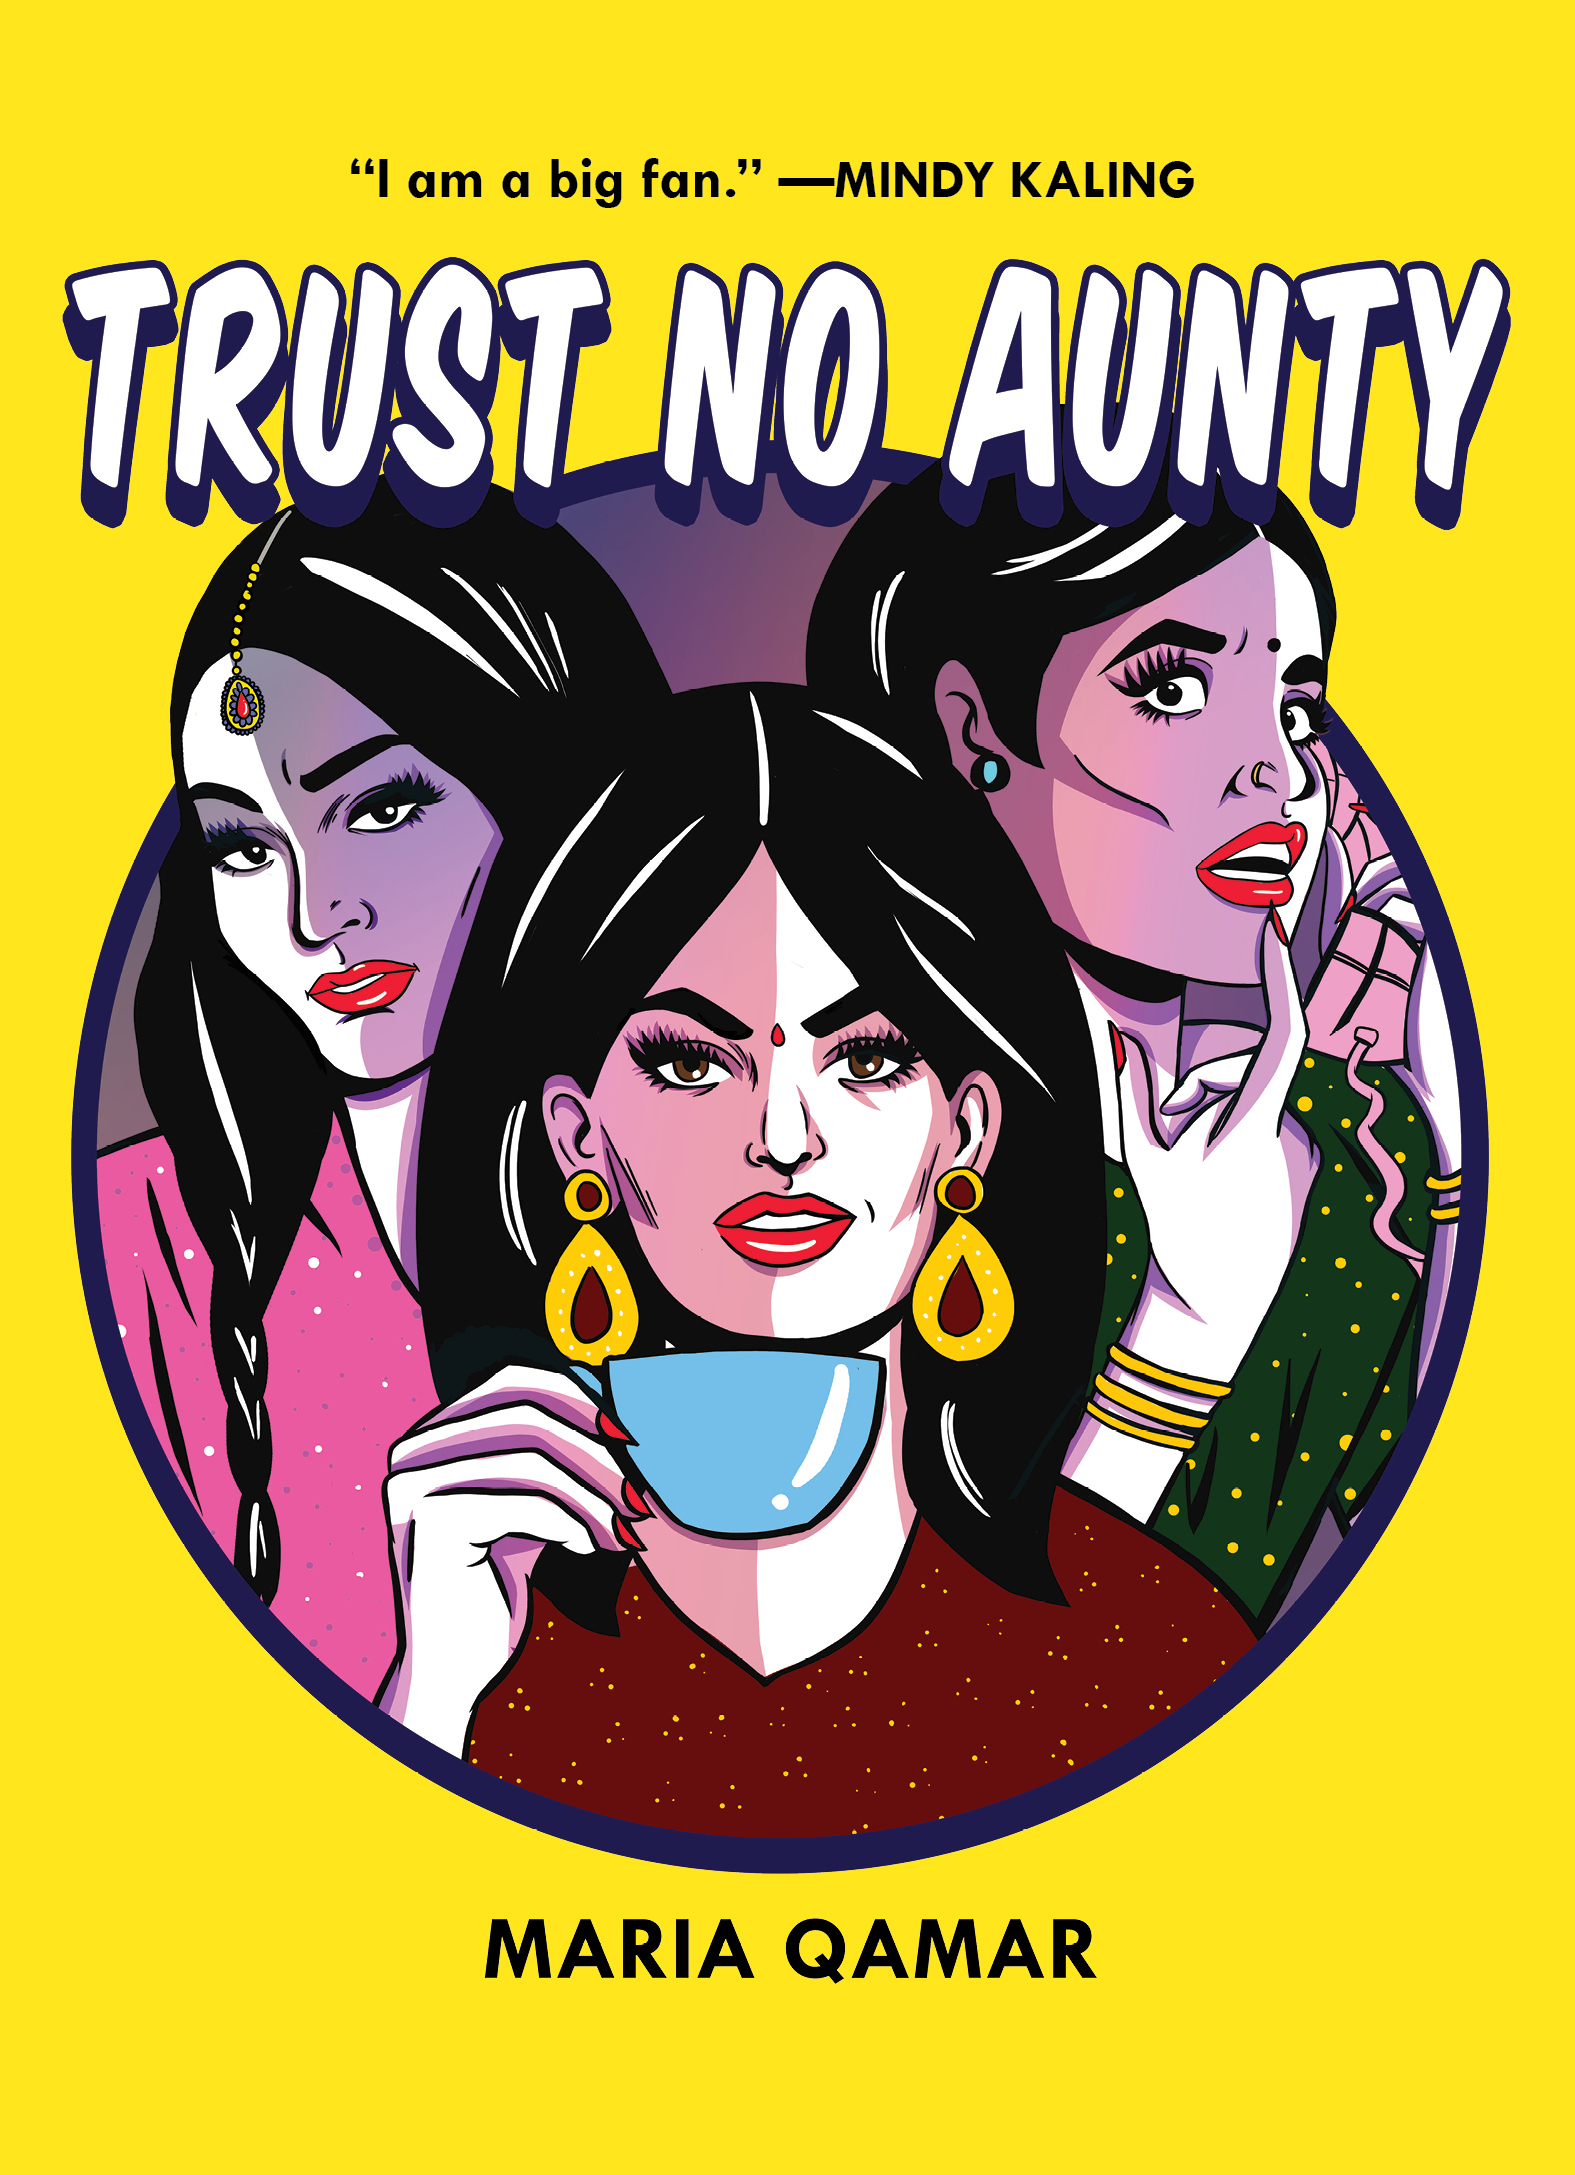 CANCELLED: Book Launch: Trust No Aunty by Maria Qamar